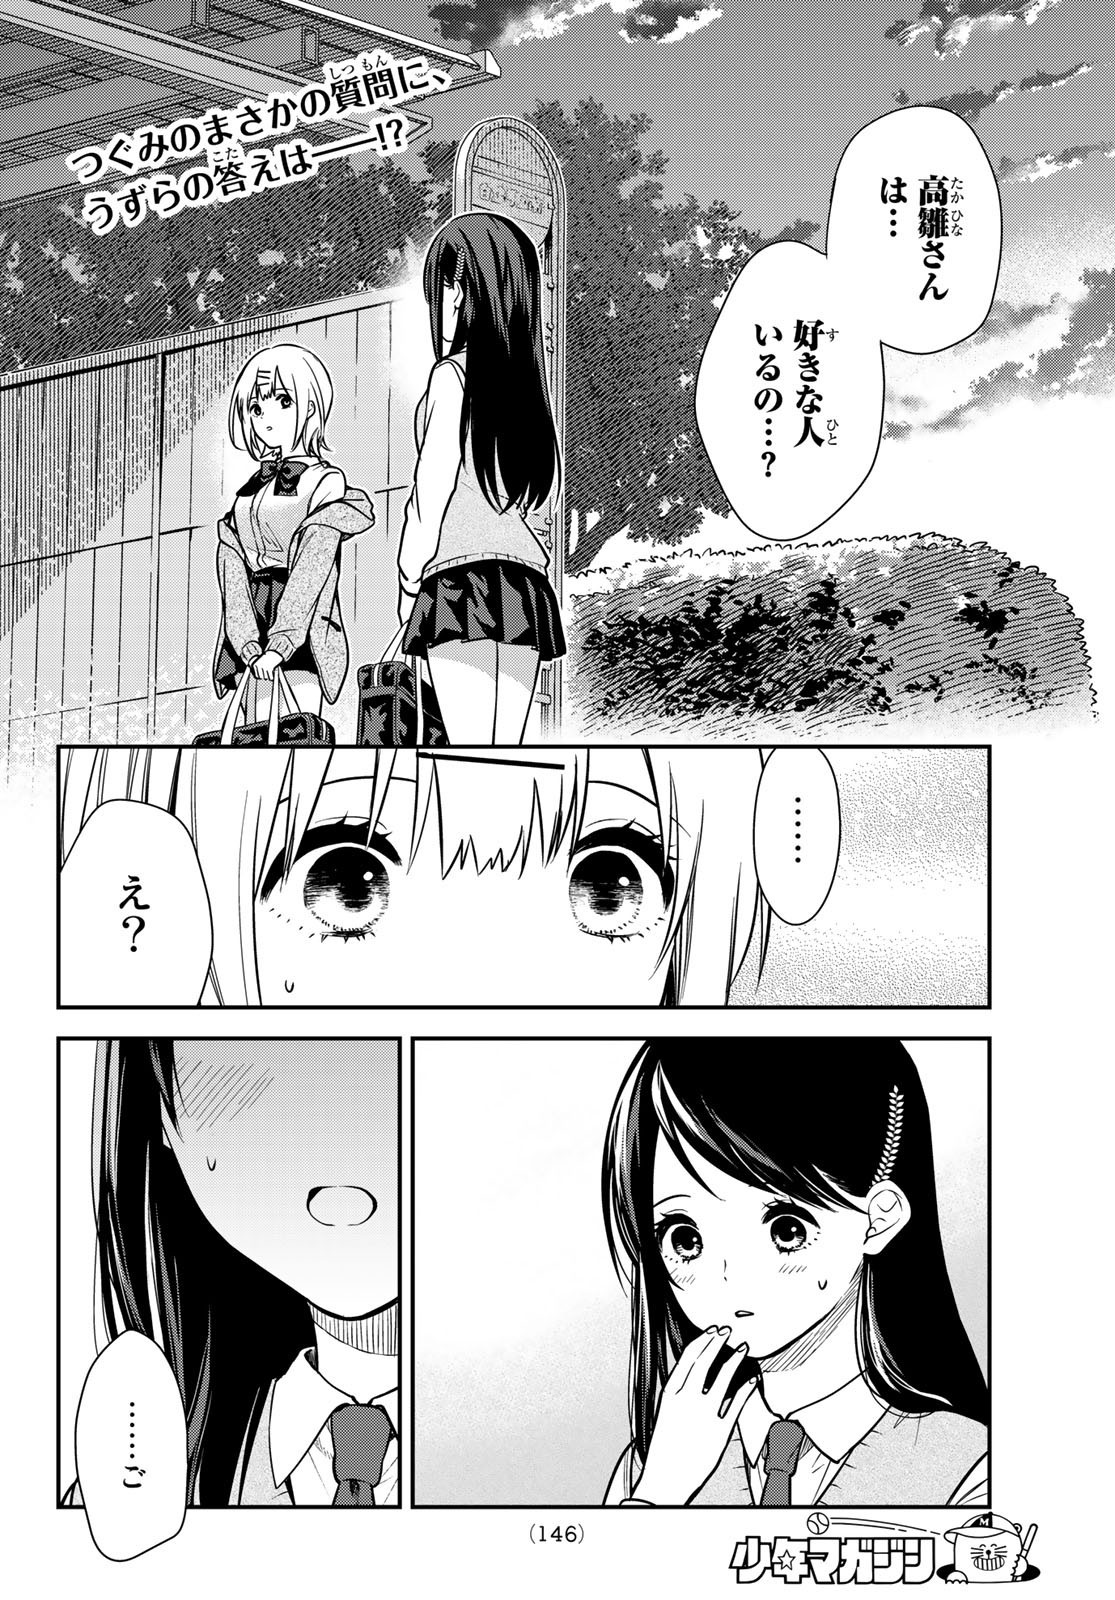 Kimi ga Megami Nara Ii no ni (I Wish You Were My Muse) - Chapter 004 - Page 2